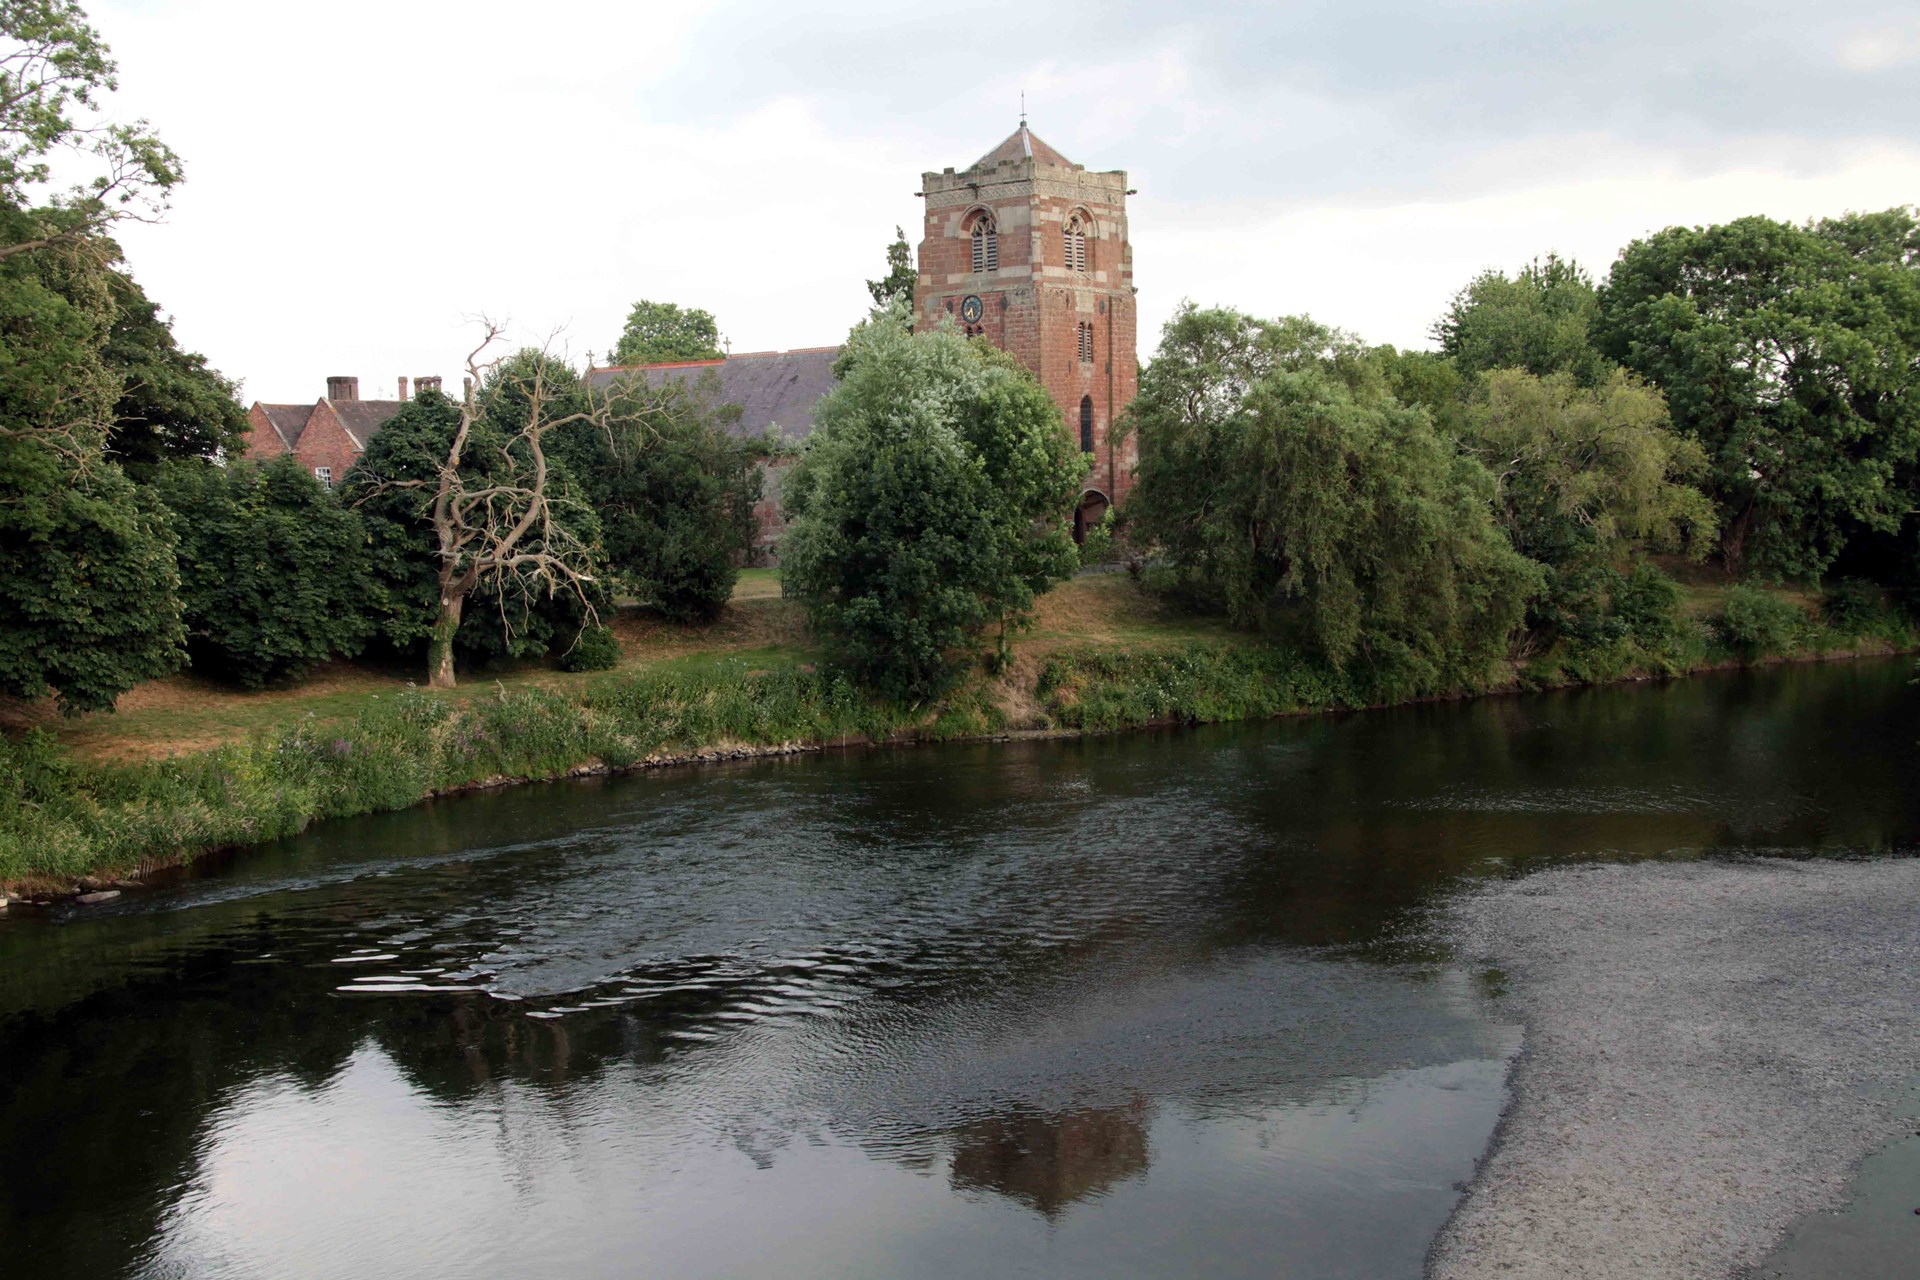 St Eatas Church and River Severn